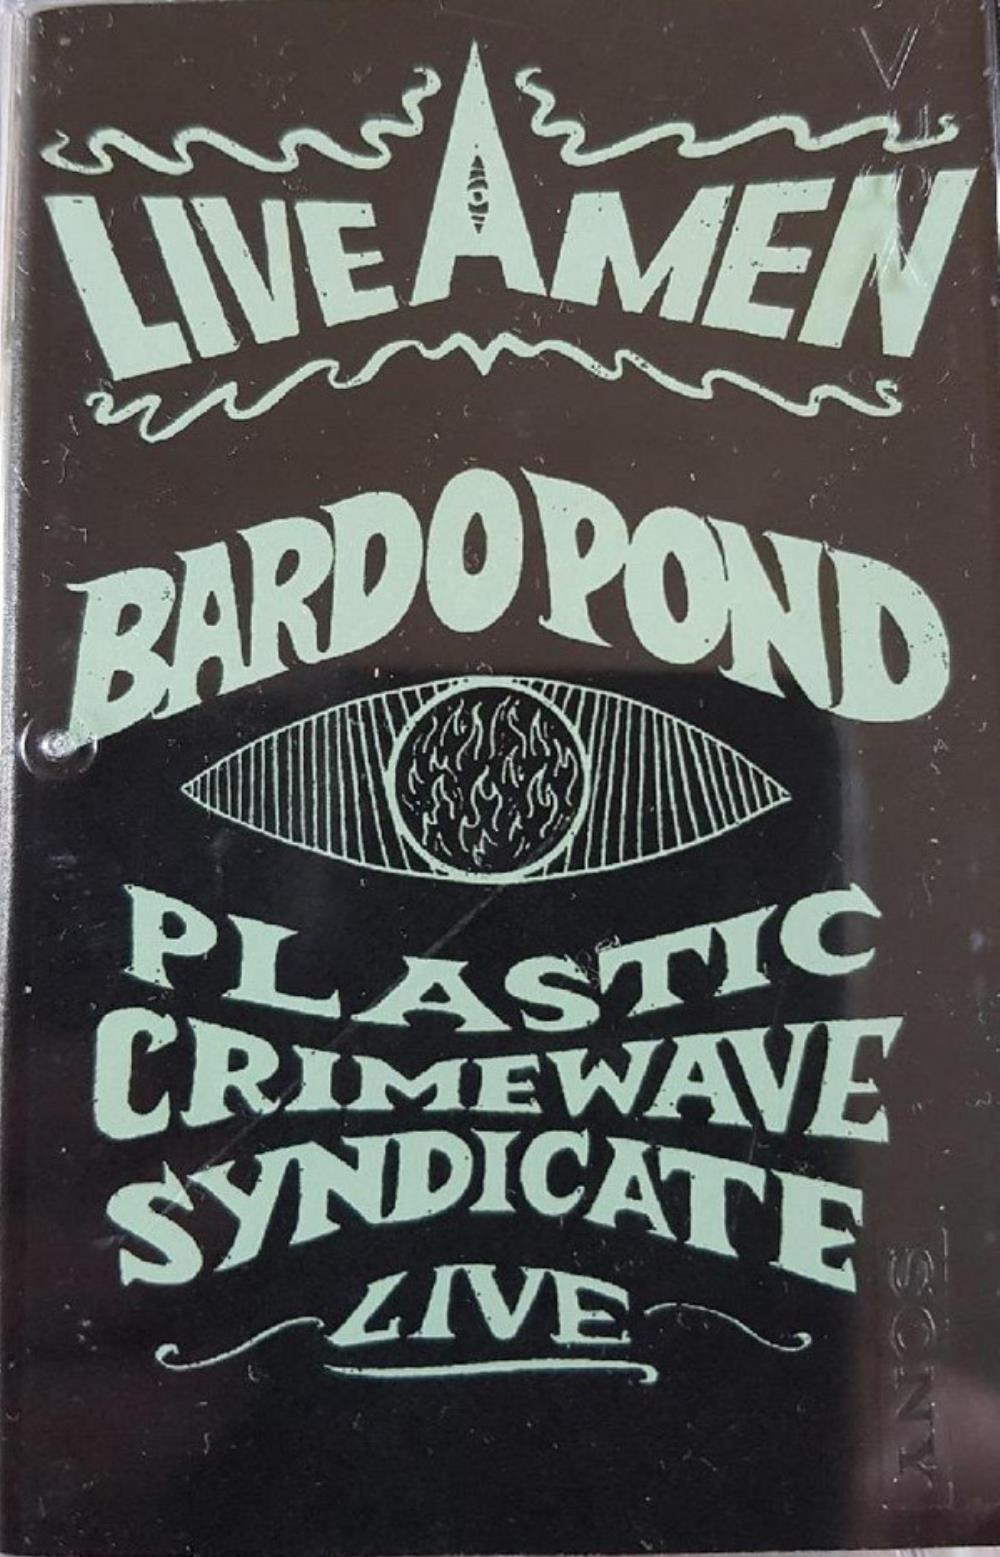 Bardo Pond Live Amen (w/Plastic Crimewave Syndicate) album cover